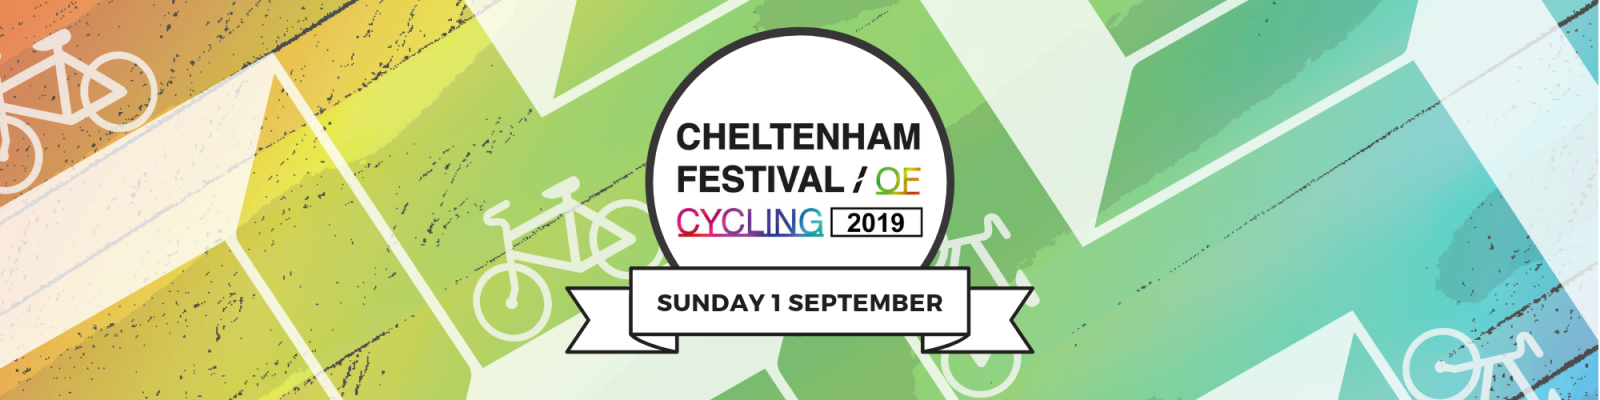 Cheltenham Festival of Cycling logo